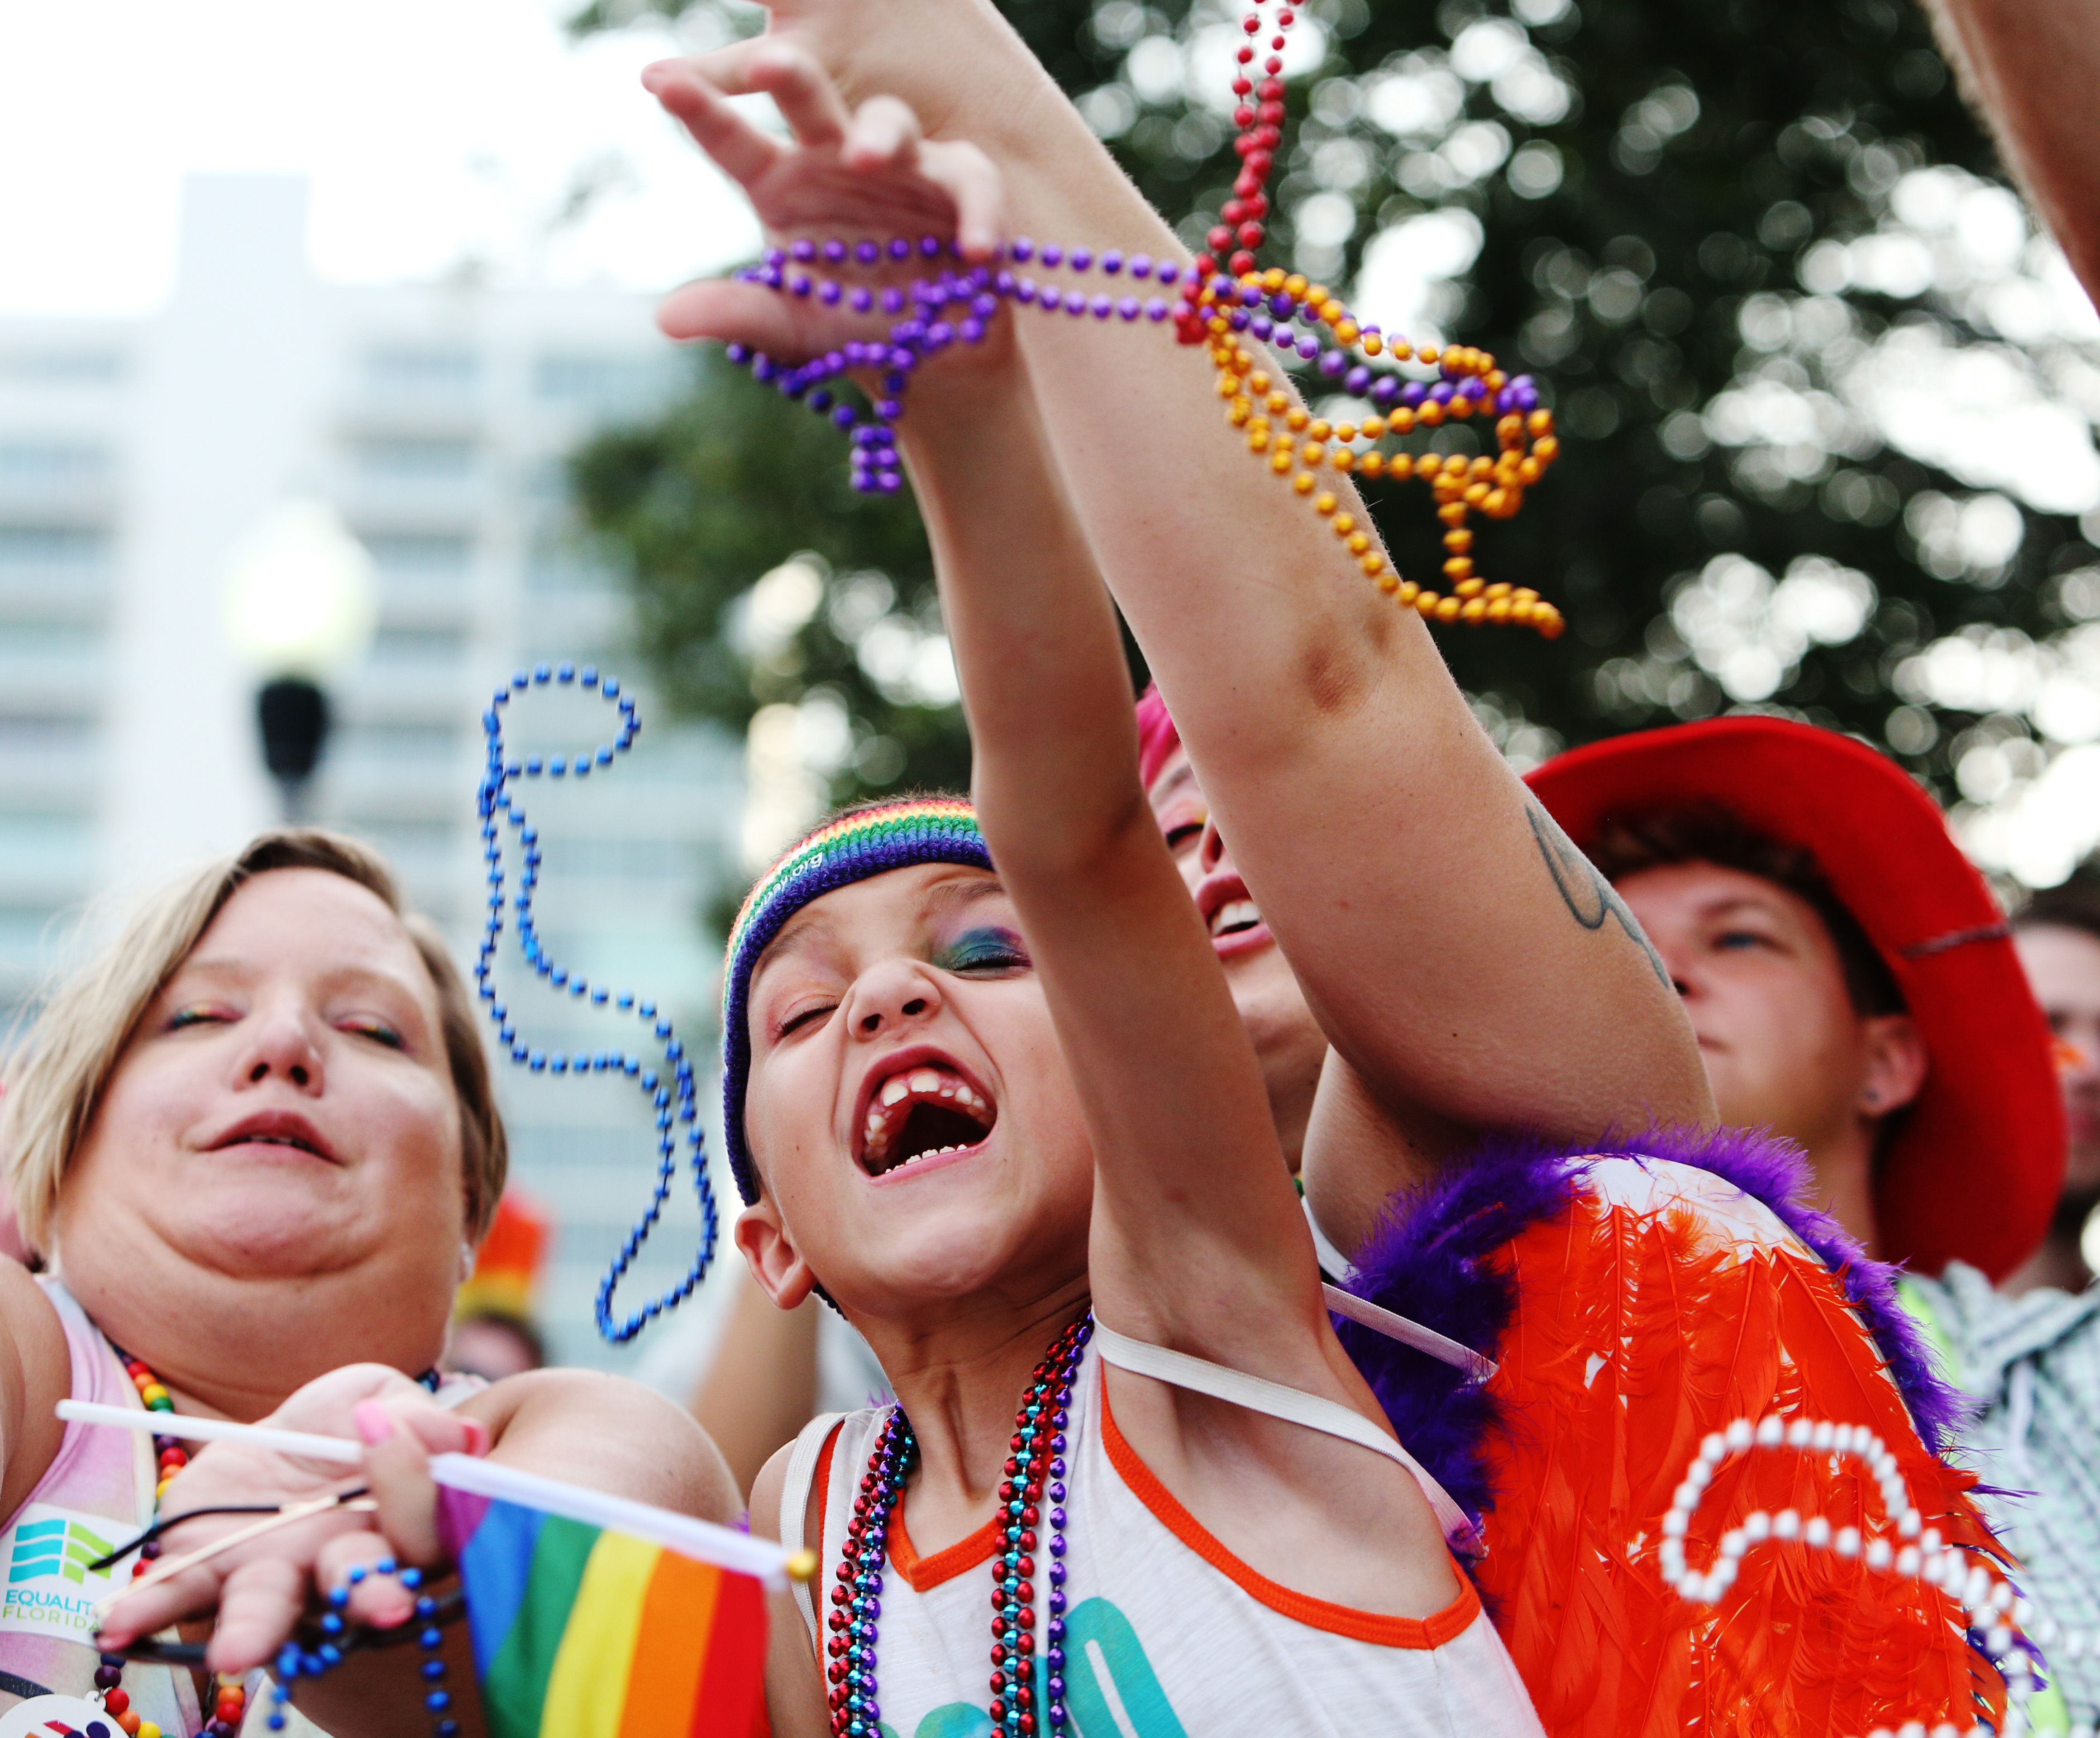 LGBTQ Pride: Should Straight People Attend?